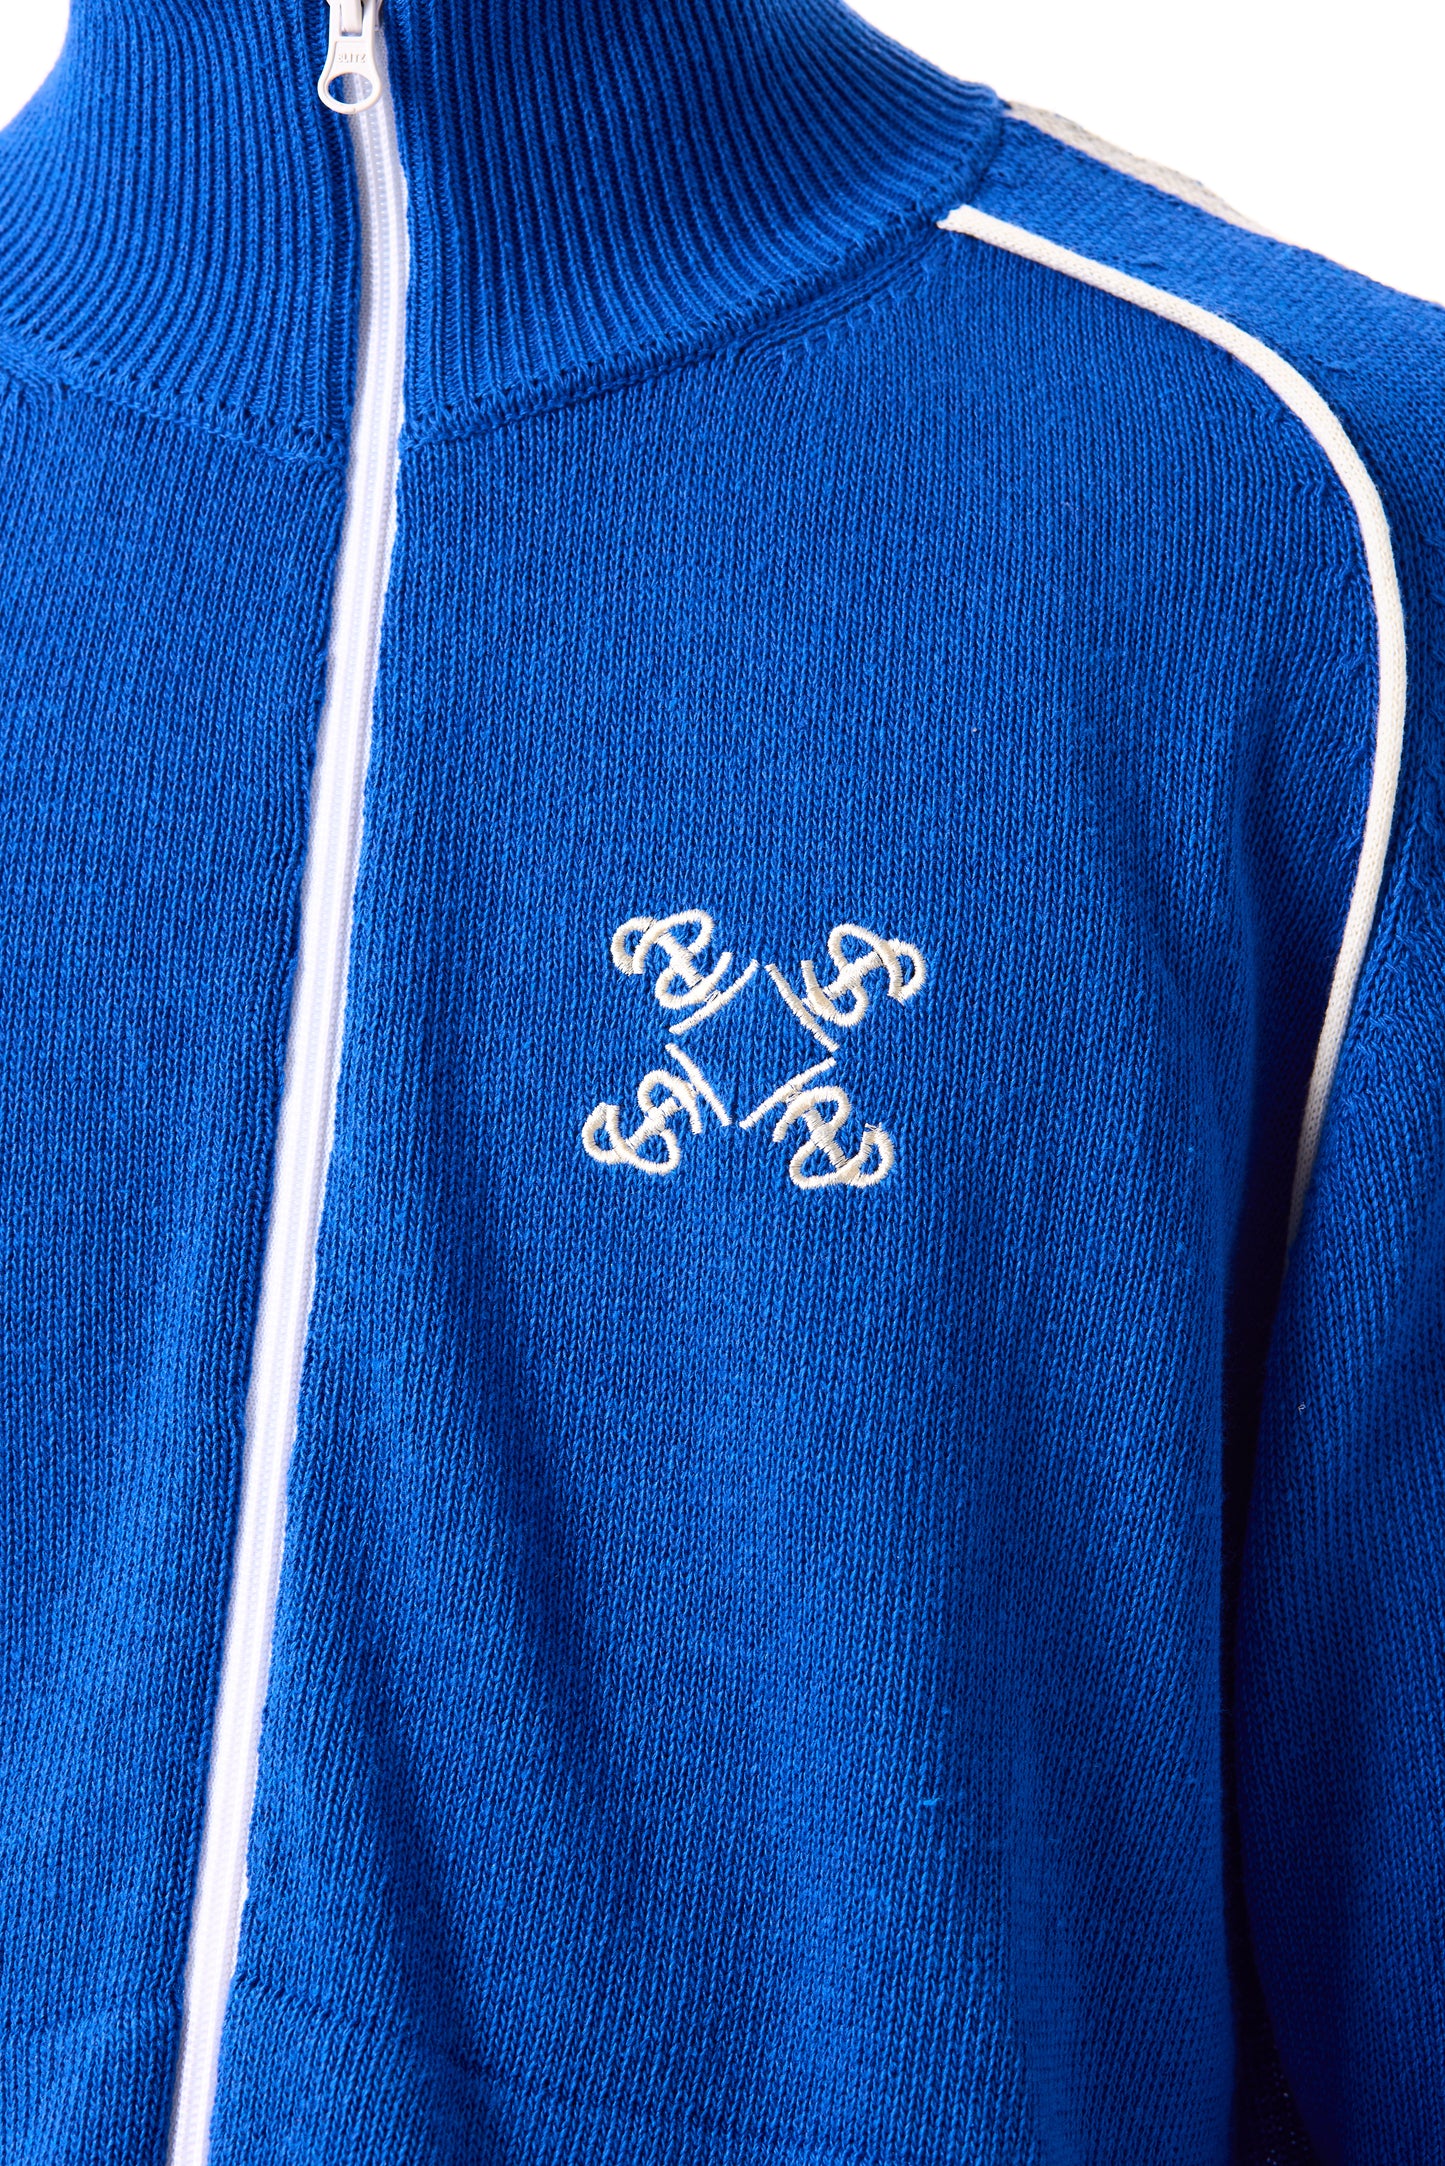 Track Suit Logo SJ Royal Blue